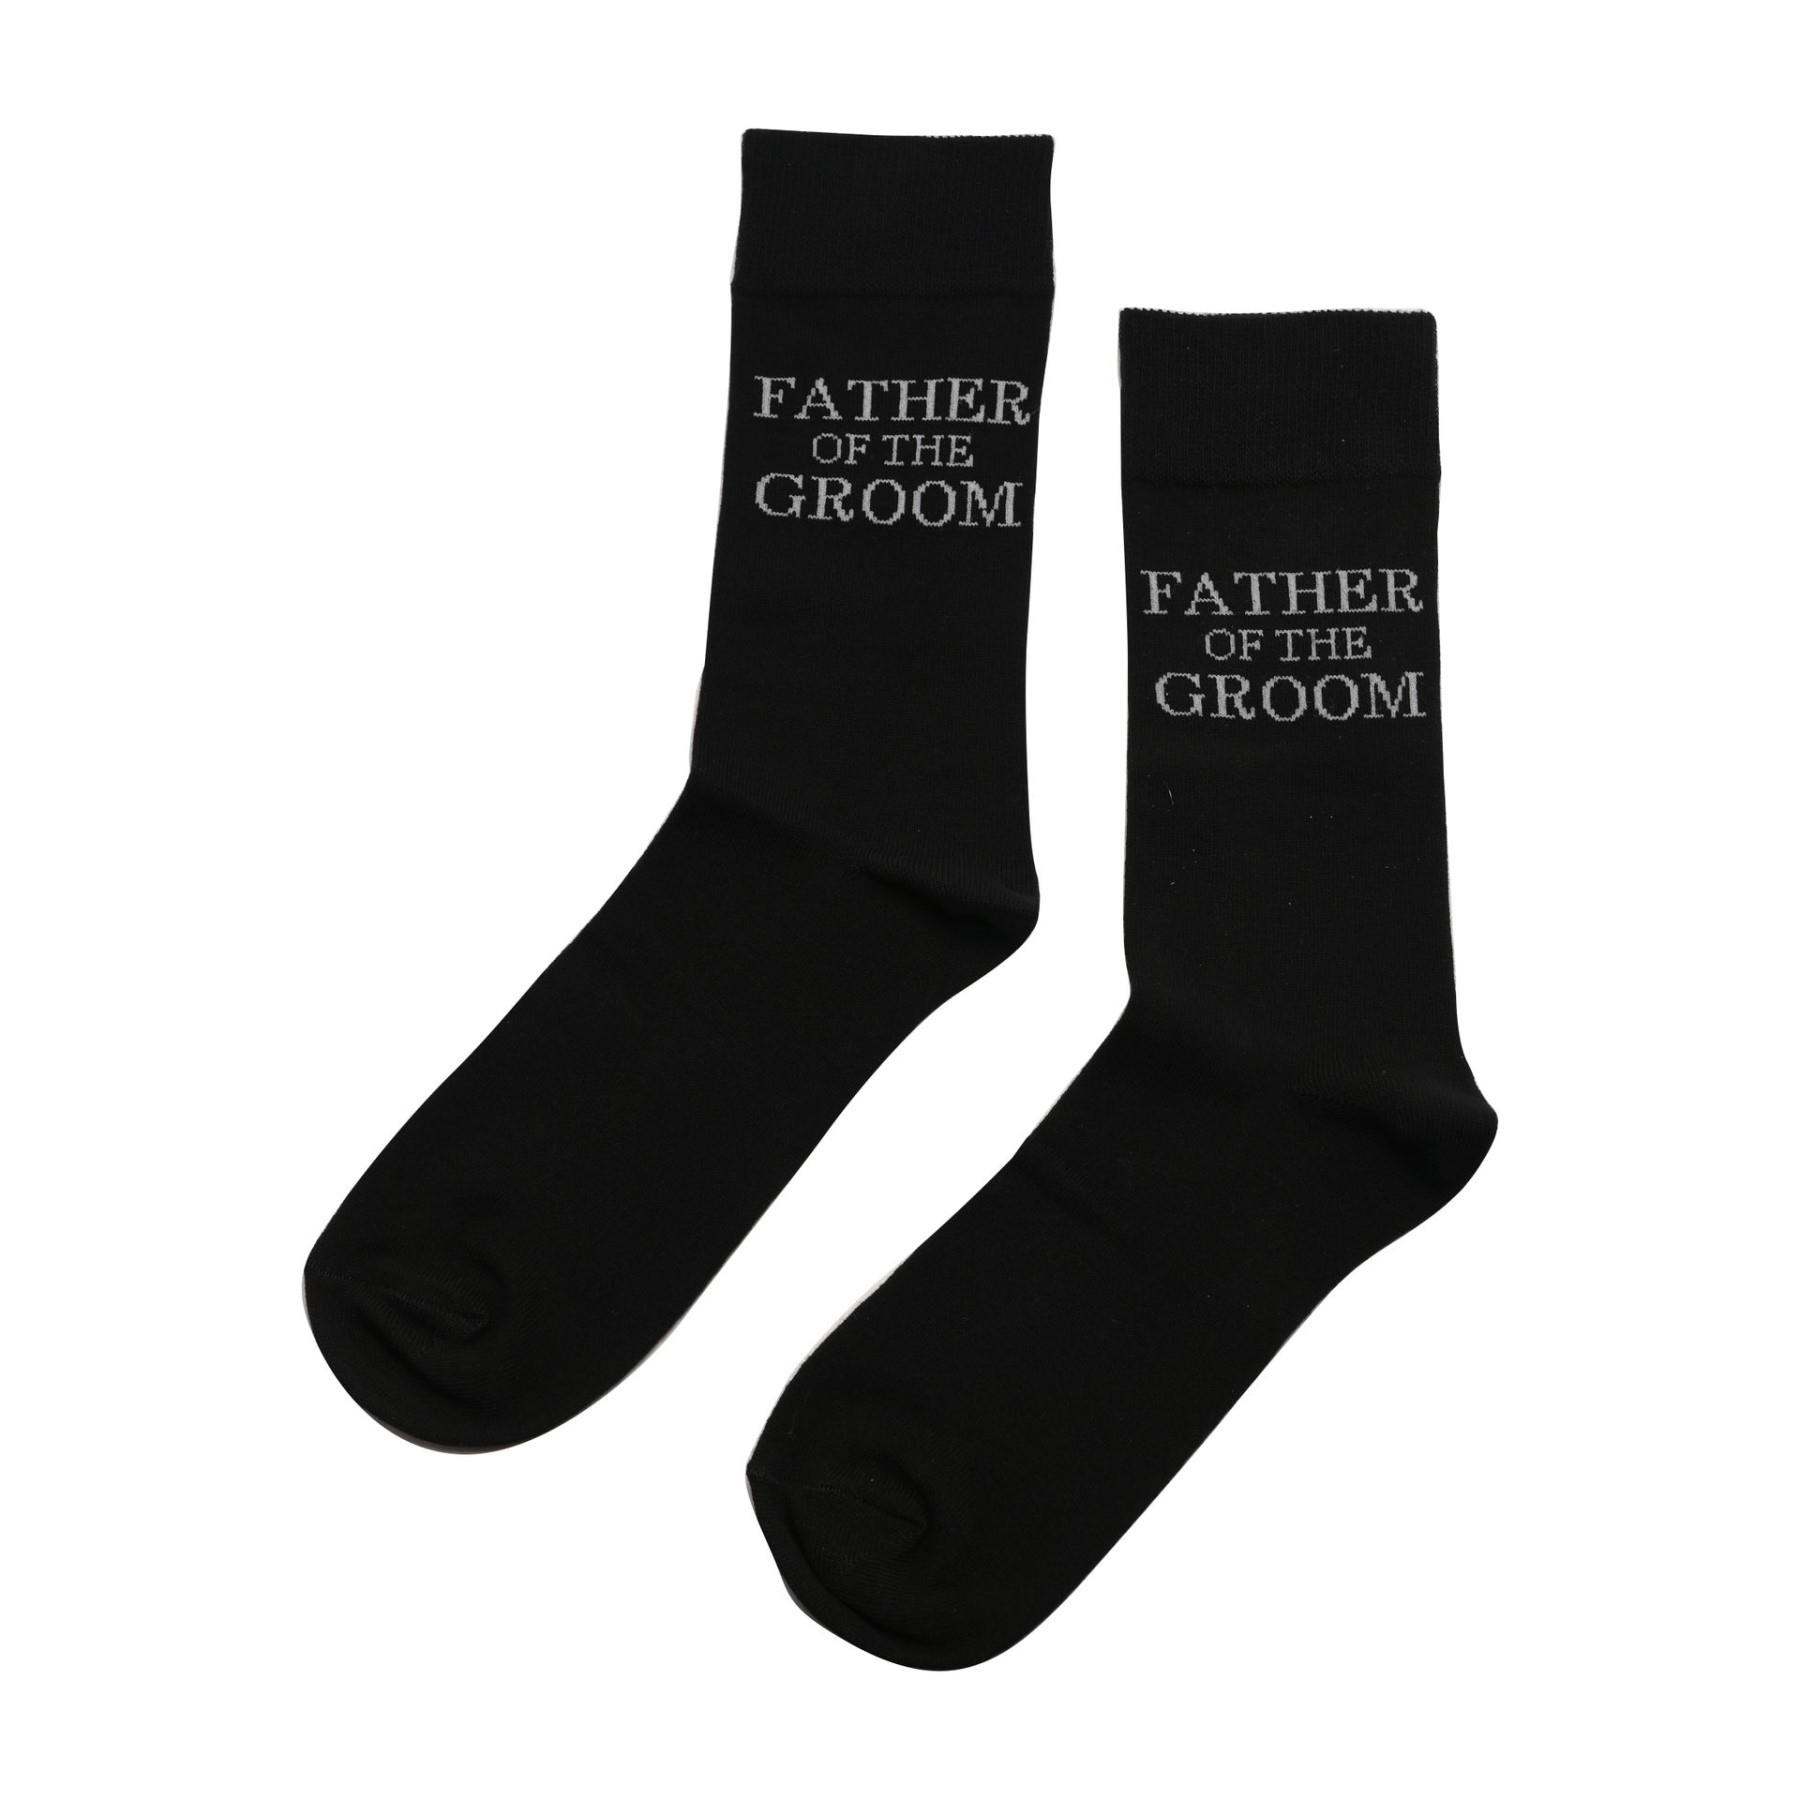 Men's Black Socks Wedding Gift - Father of the Groom